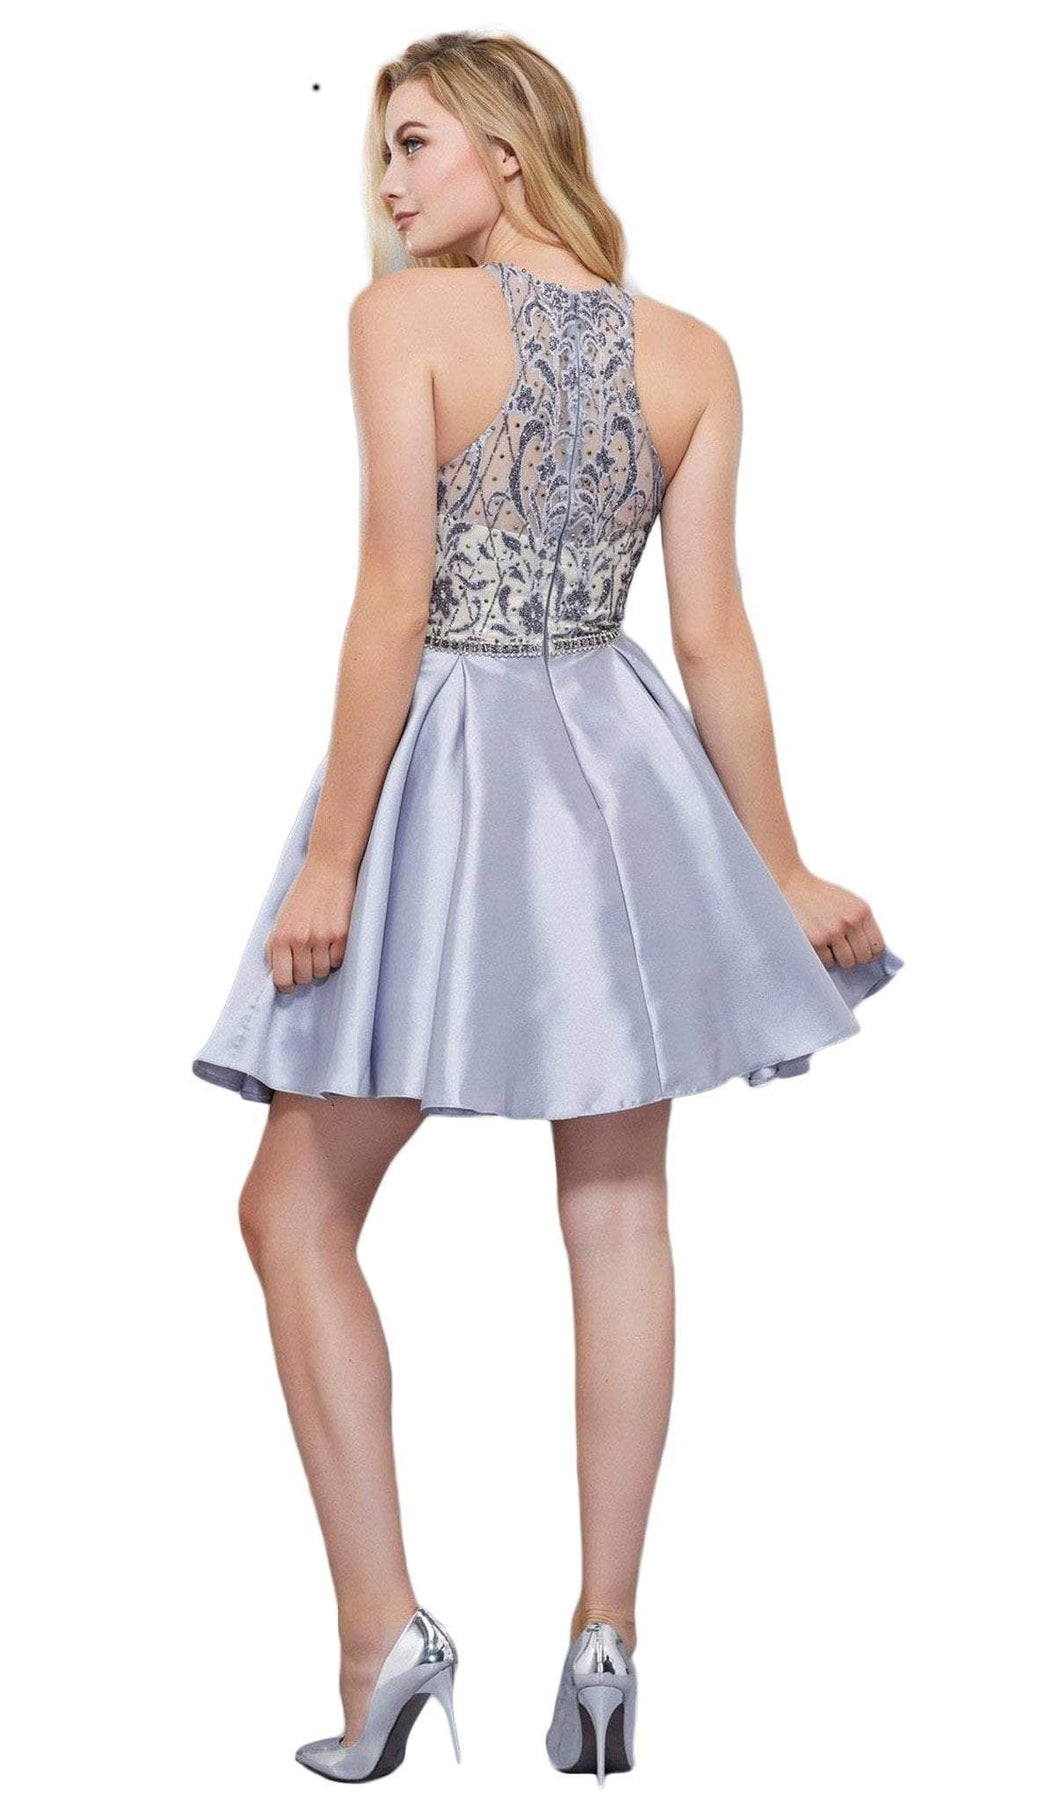 Nox Anabel - 6328 Embellished Illusion Halter A-line Dress Special Occasion Dress